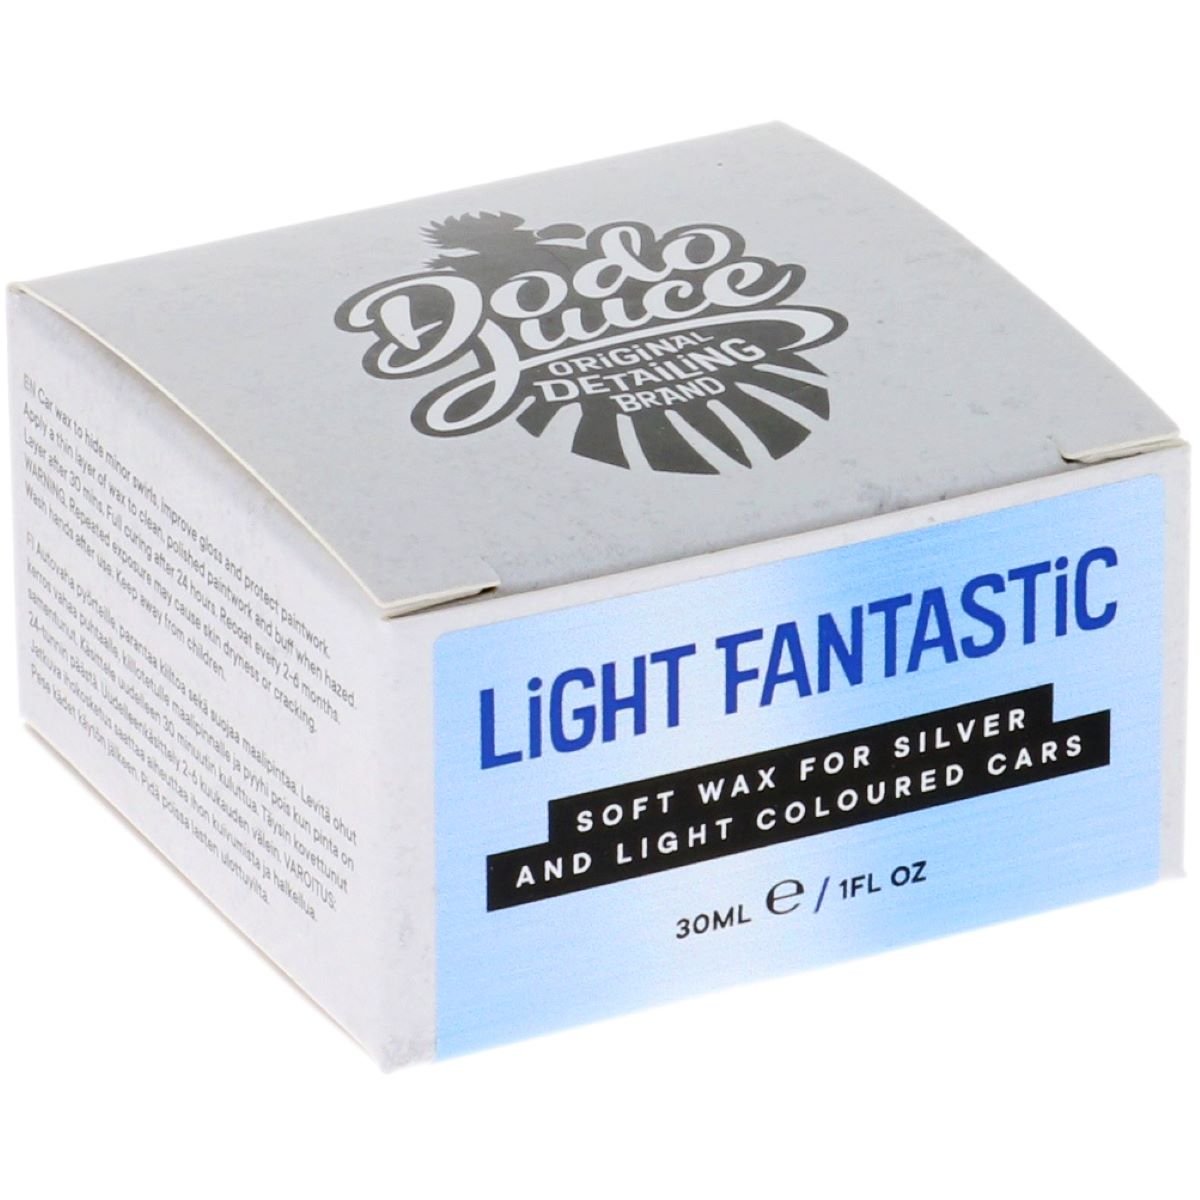 Light Fantastic soft wax for light coloured cars - 30ml